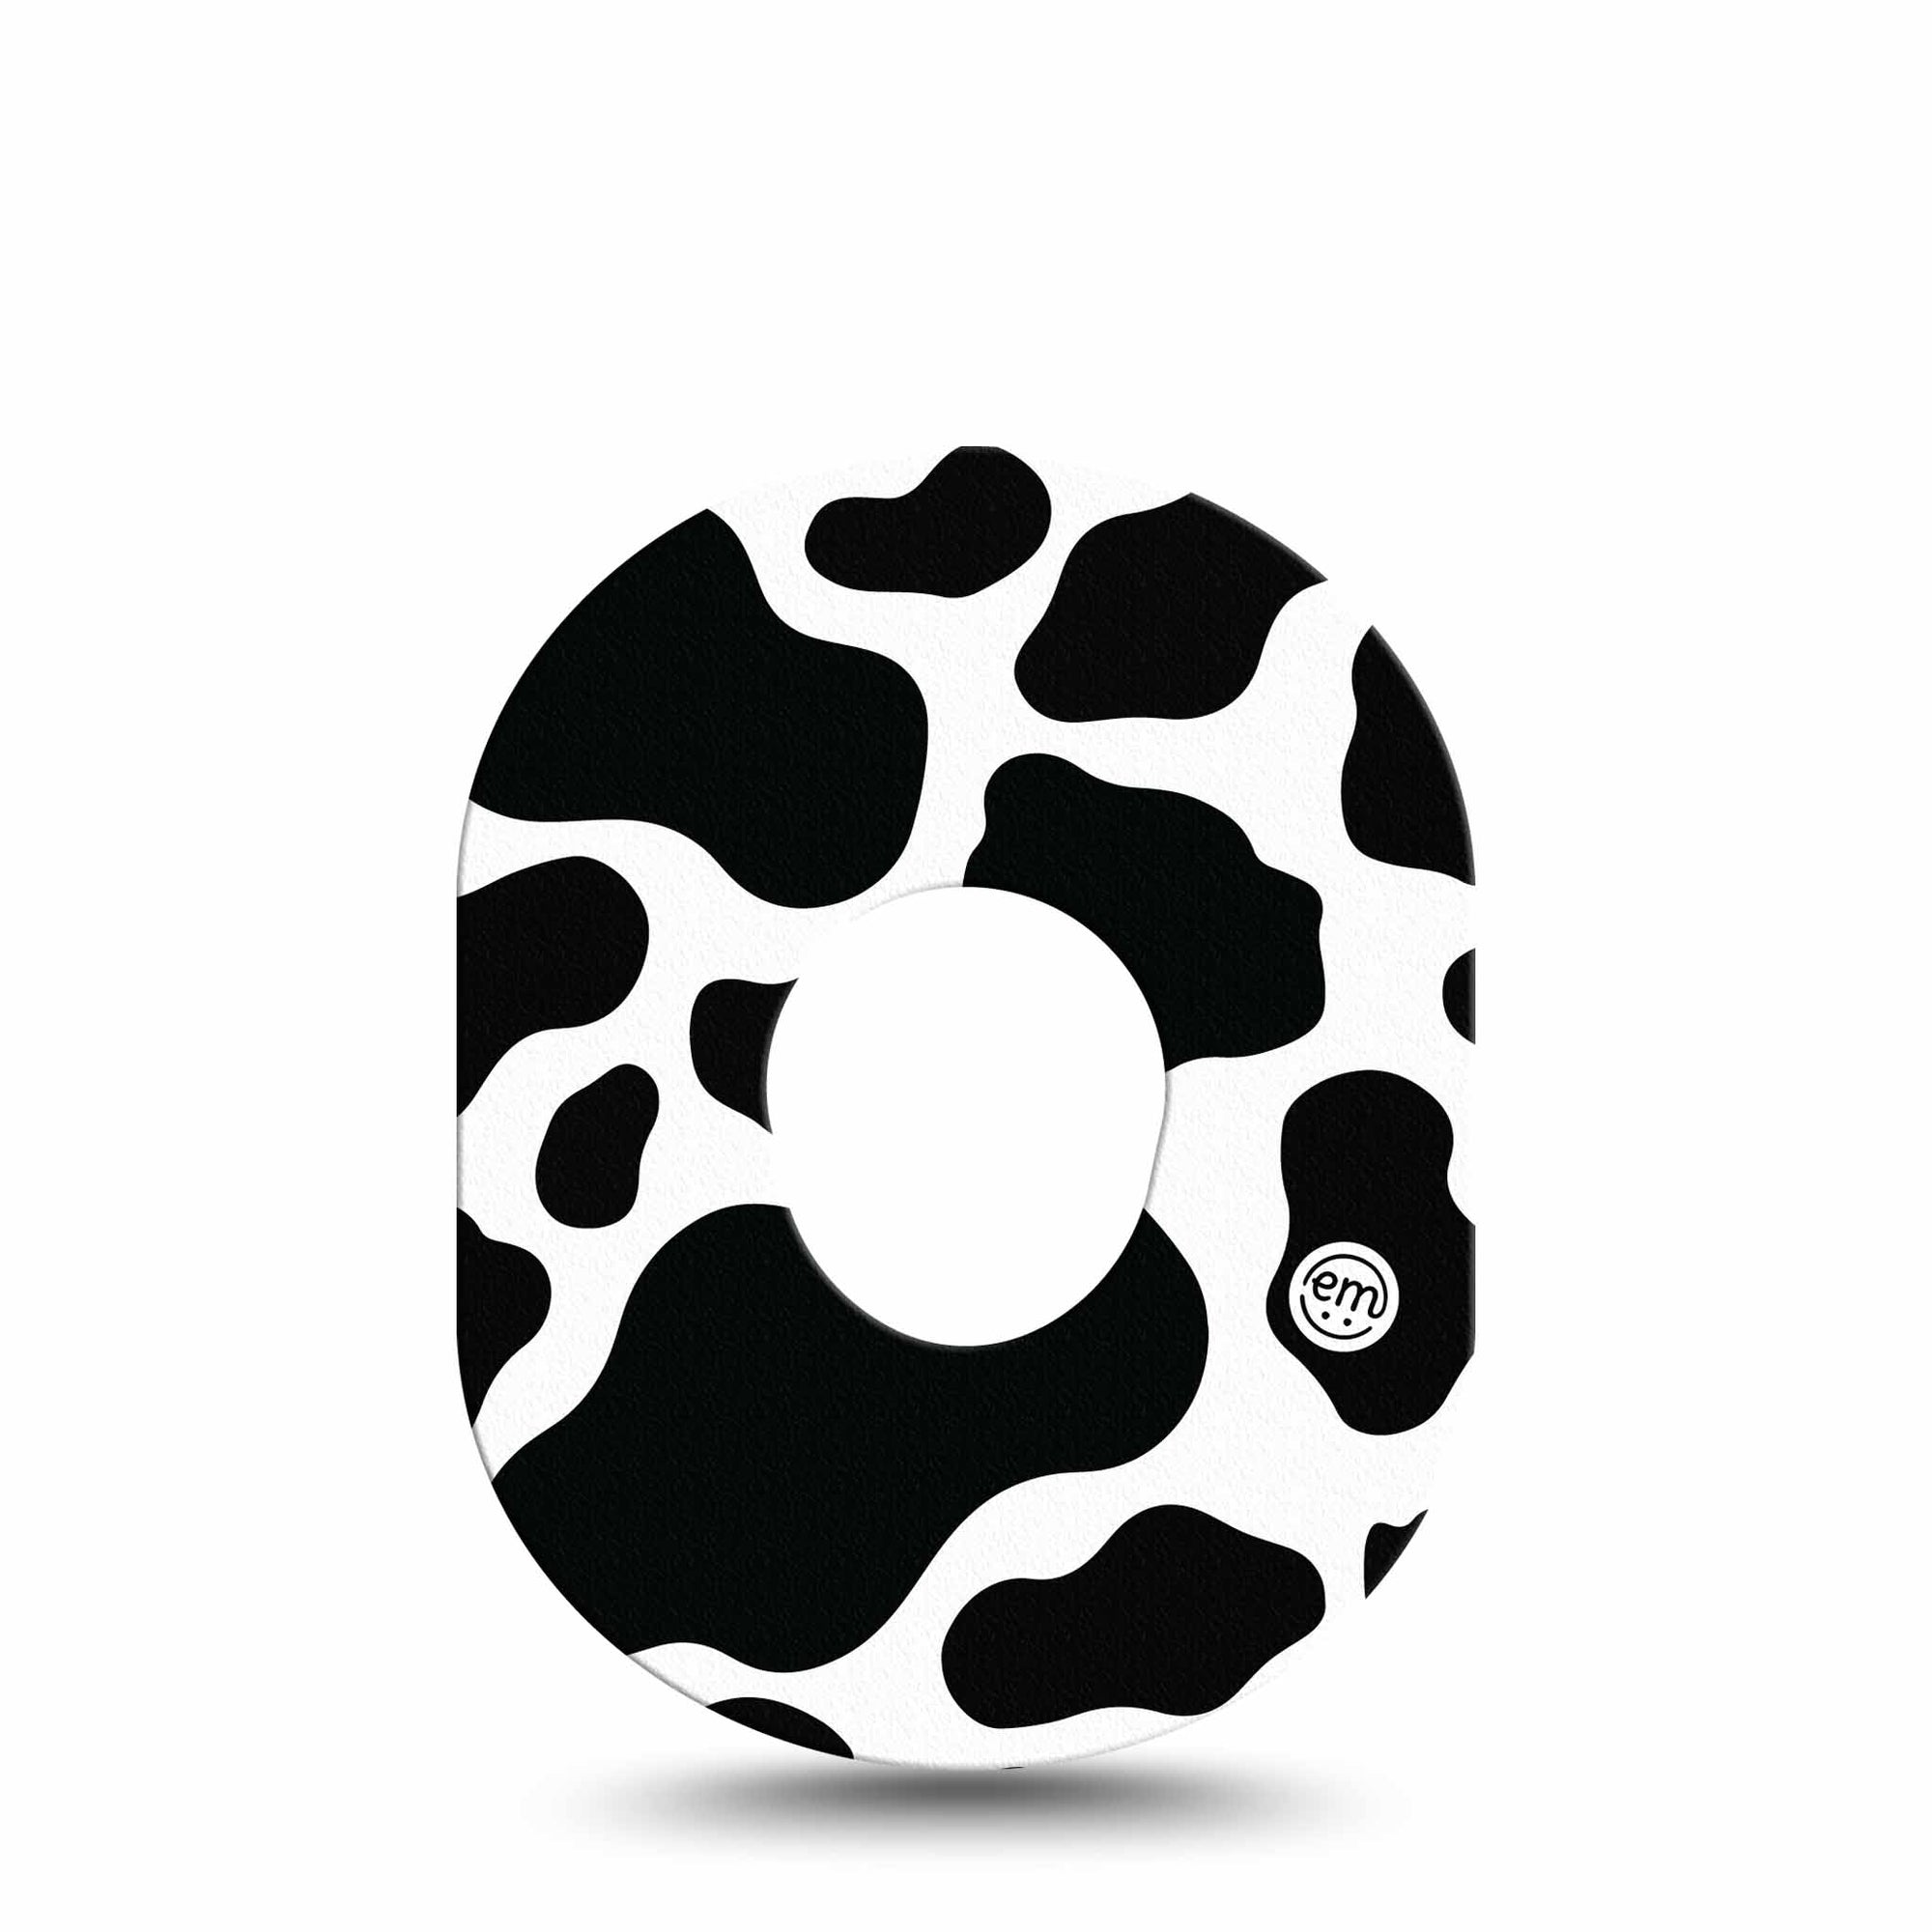 Cow Dexcom G7 Tape, Single, Cow Spots Print, CGM Overlay Patch Design